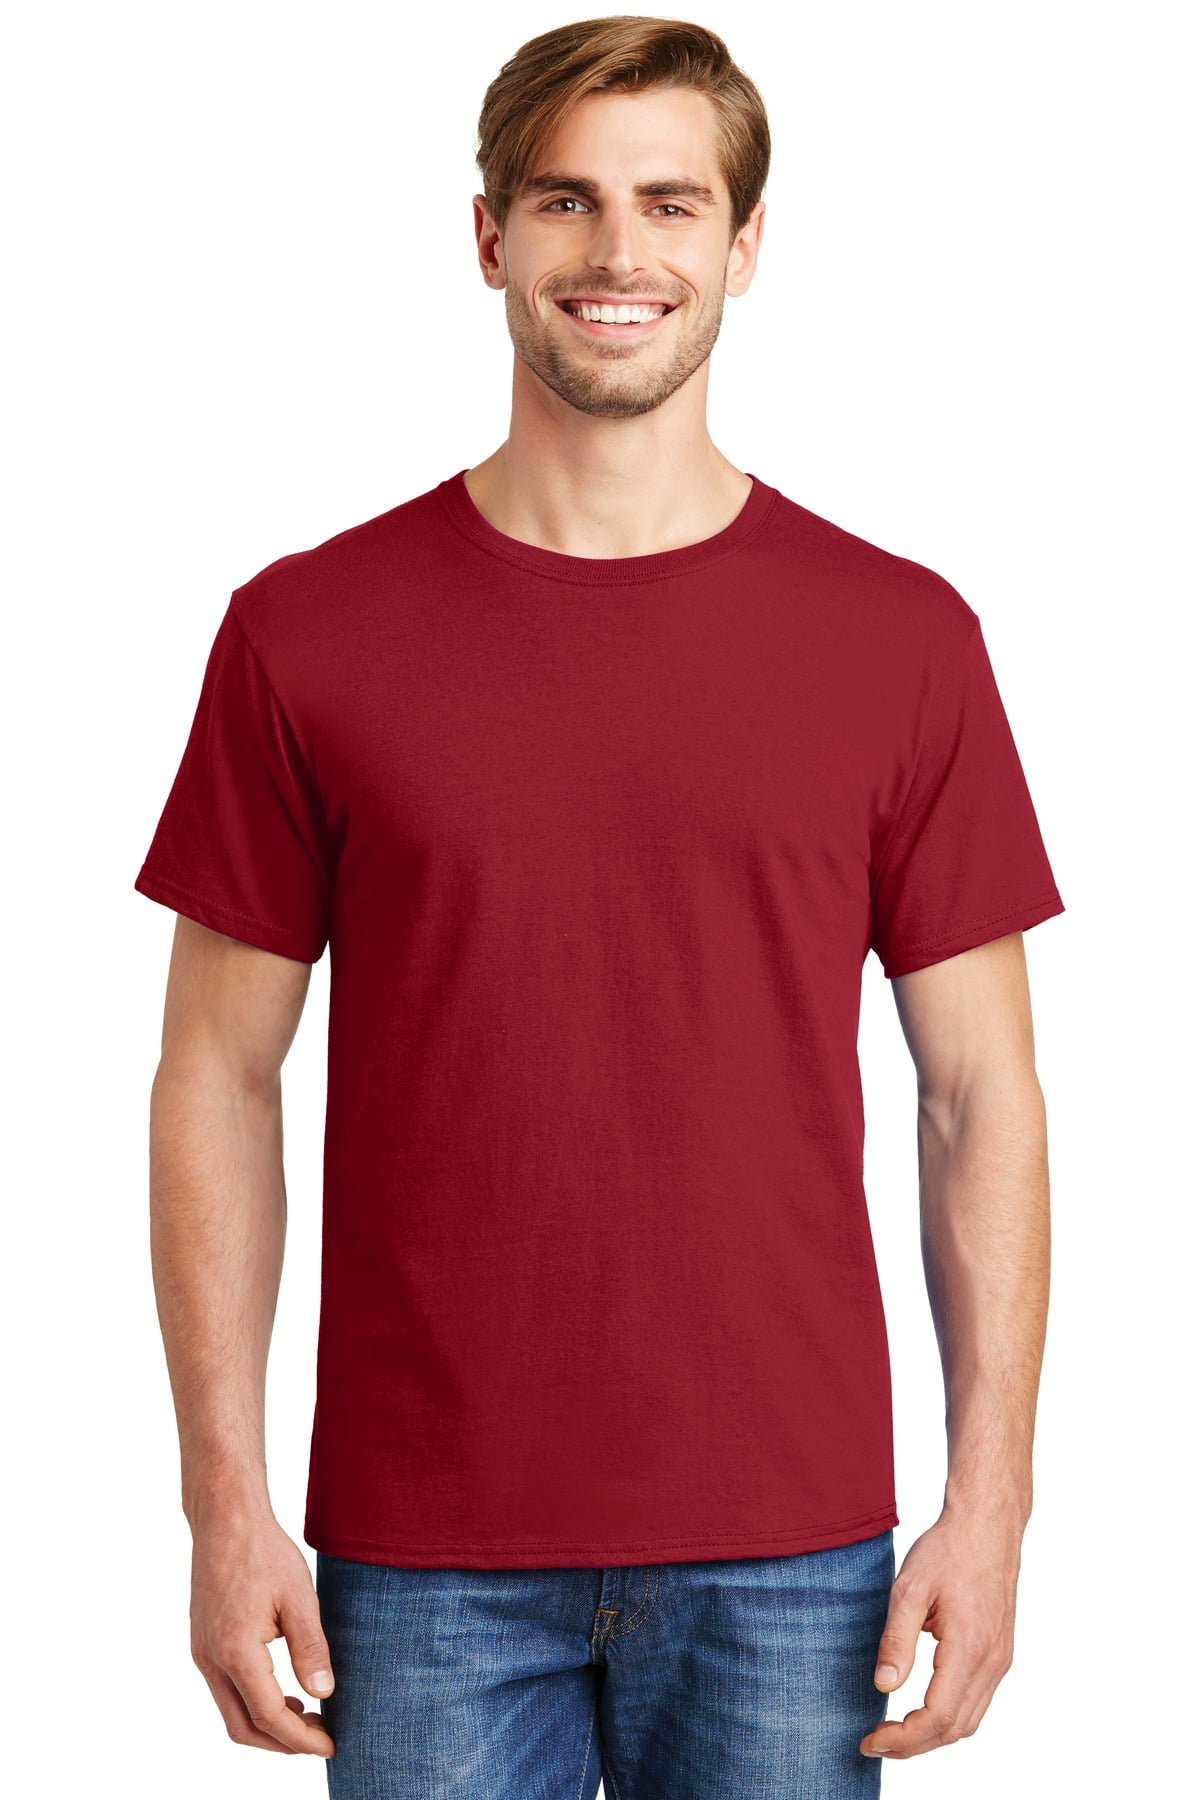 Hanes ComfortSoft 100% Cotton T-Shirt 